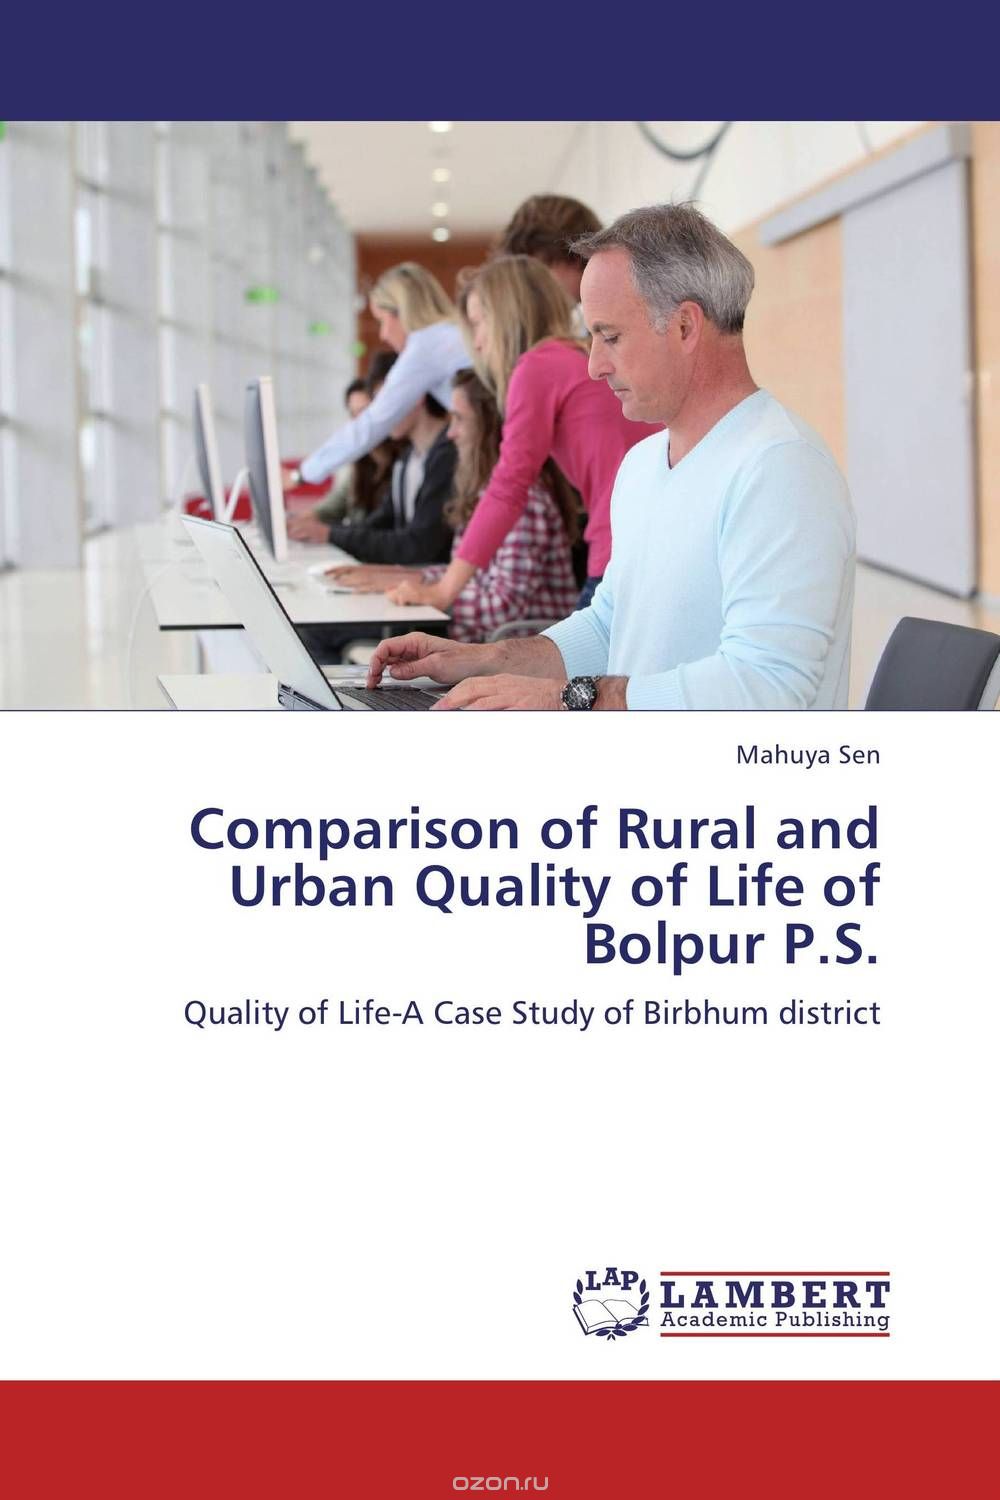 Скачать книгу "Comparison of Rural and Urban Quality of Life of Bolpur P.S."